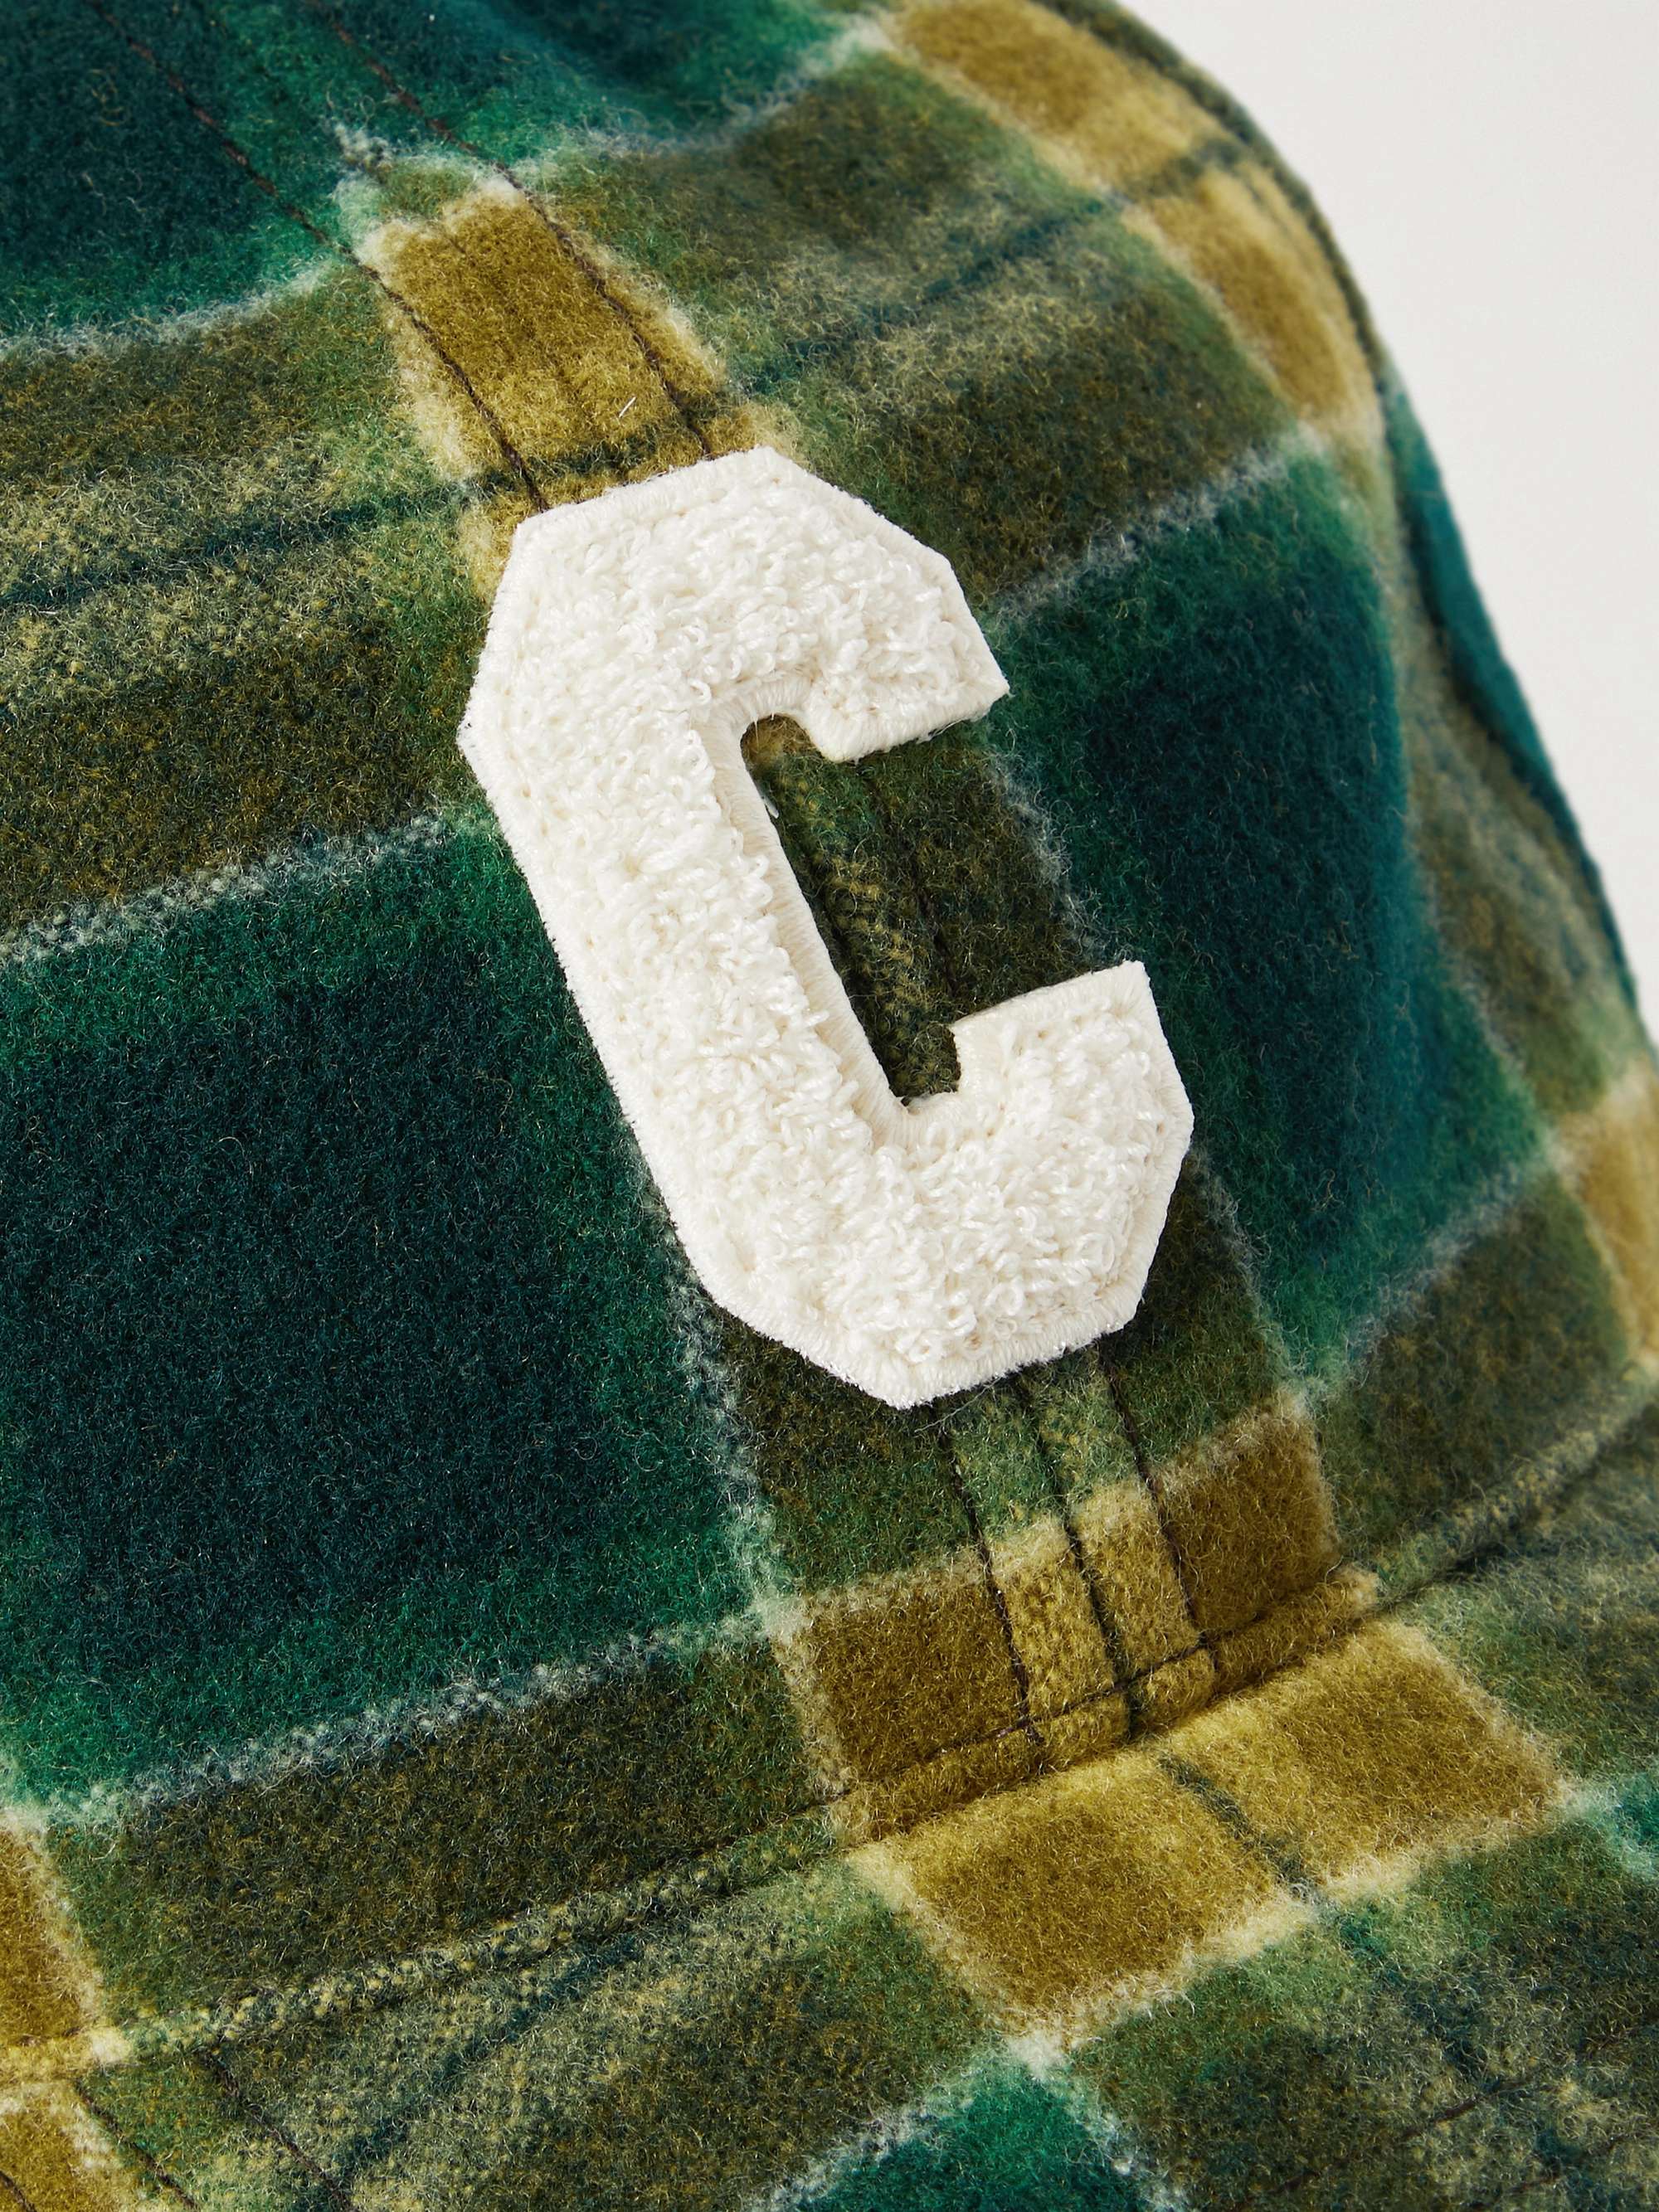 CELINE HOMME Logo-Appliquéd Checked Cotton-Flannel Baseball Cap